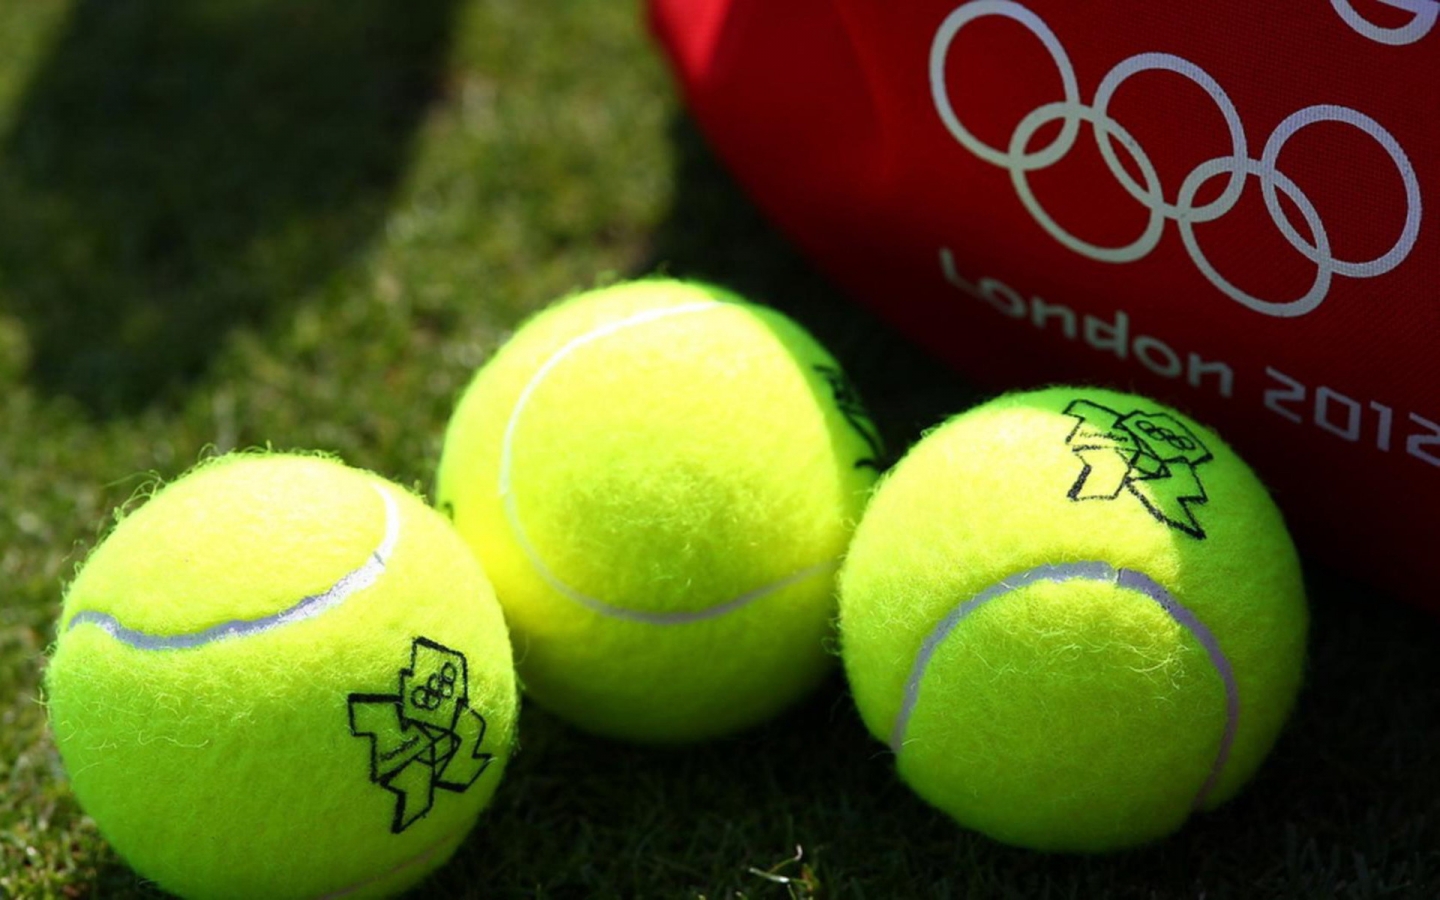 London 2012 Olympics Tennis Balls for 1440 x 900 widescreen resolution